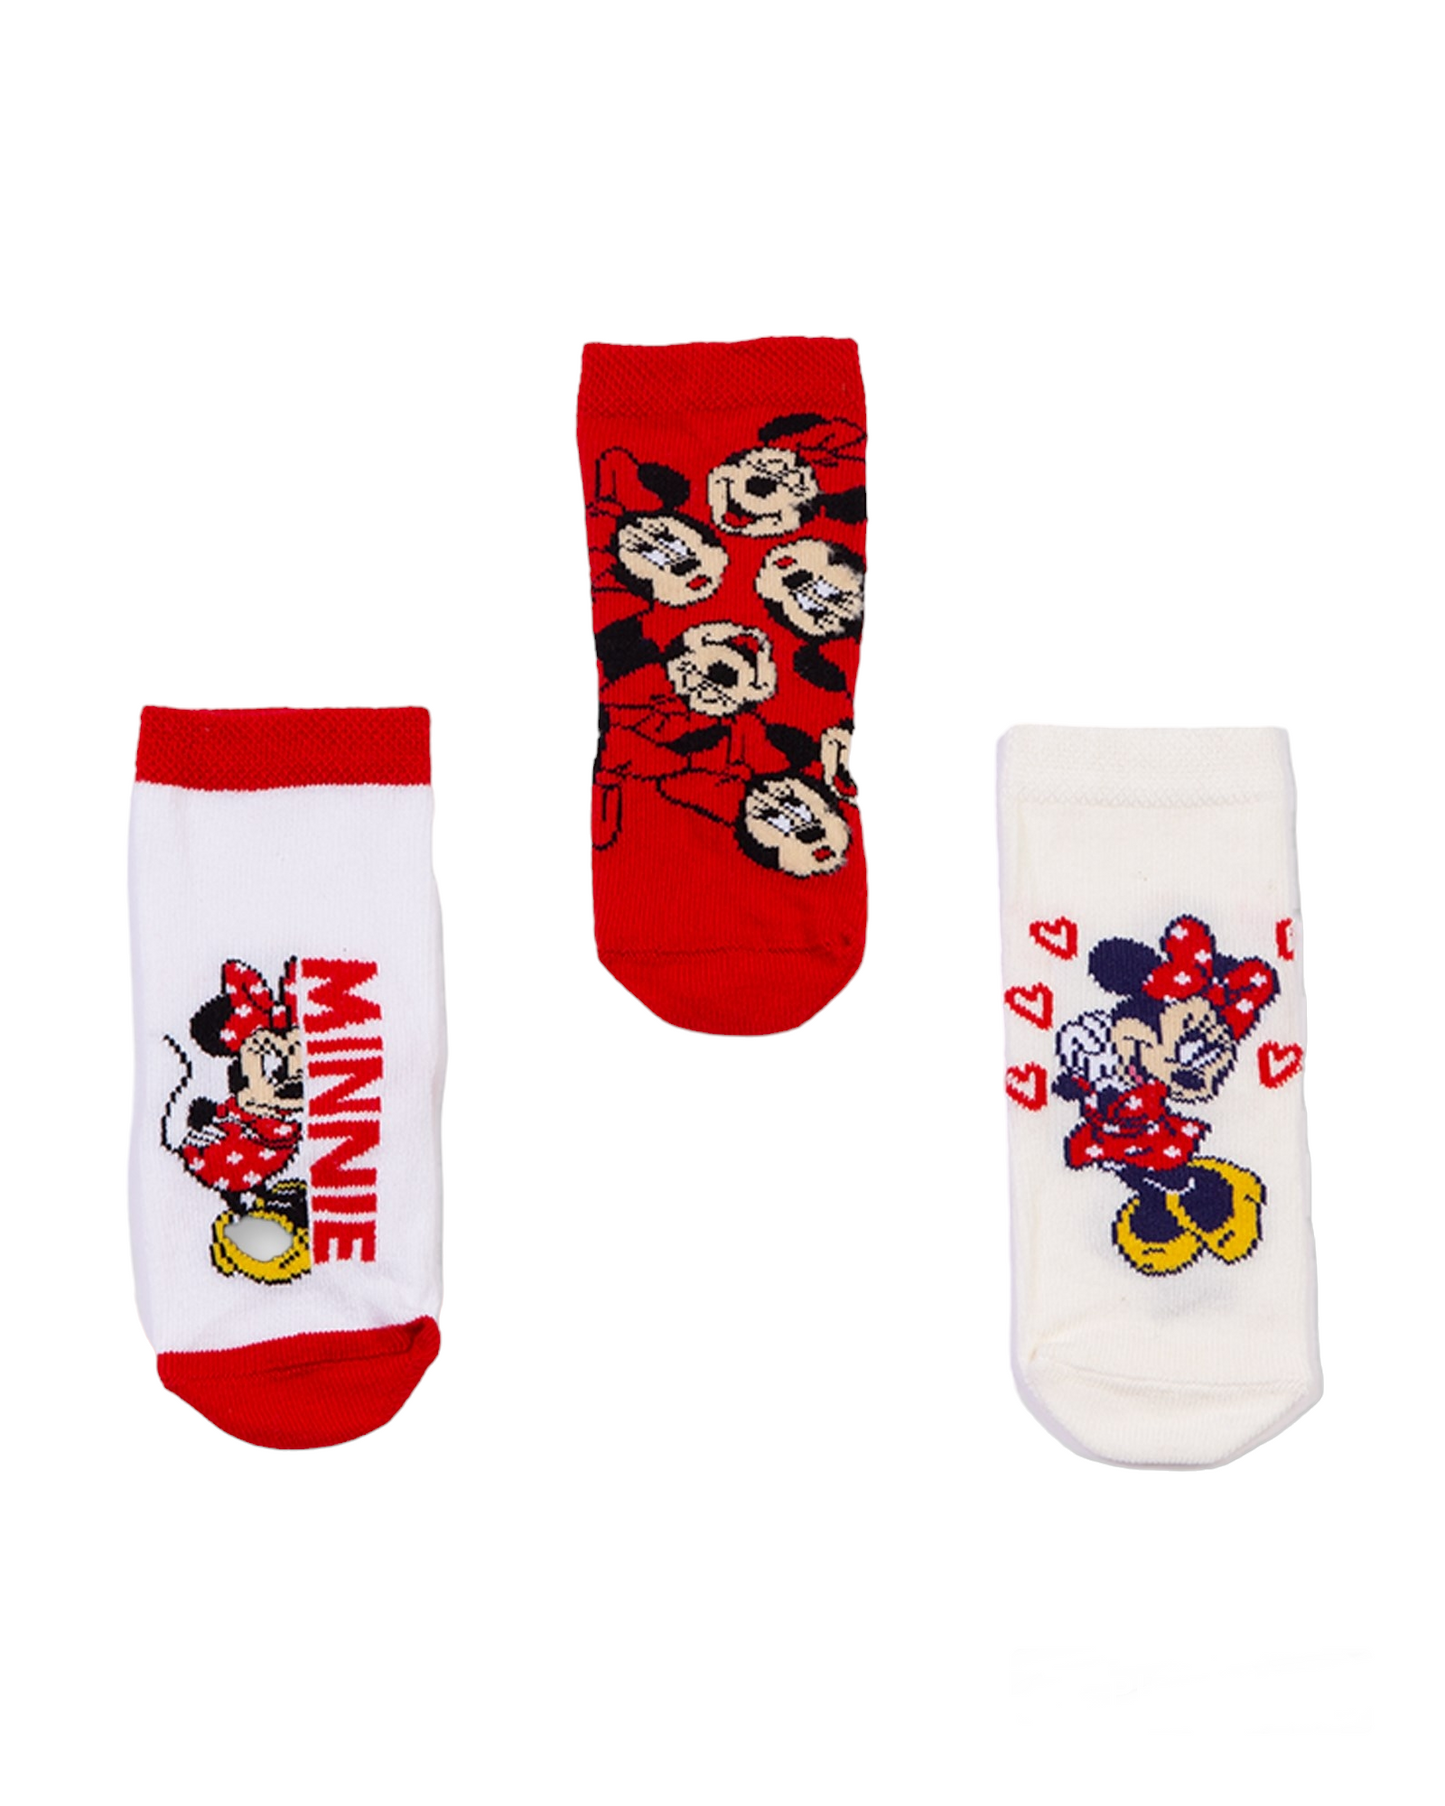 Disney Baby Minnie Mouse Socks